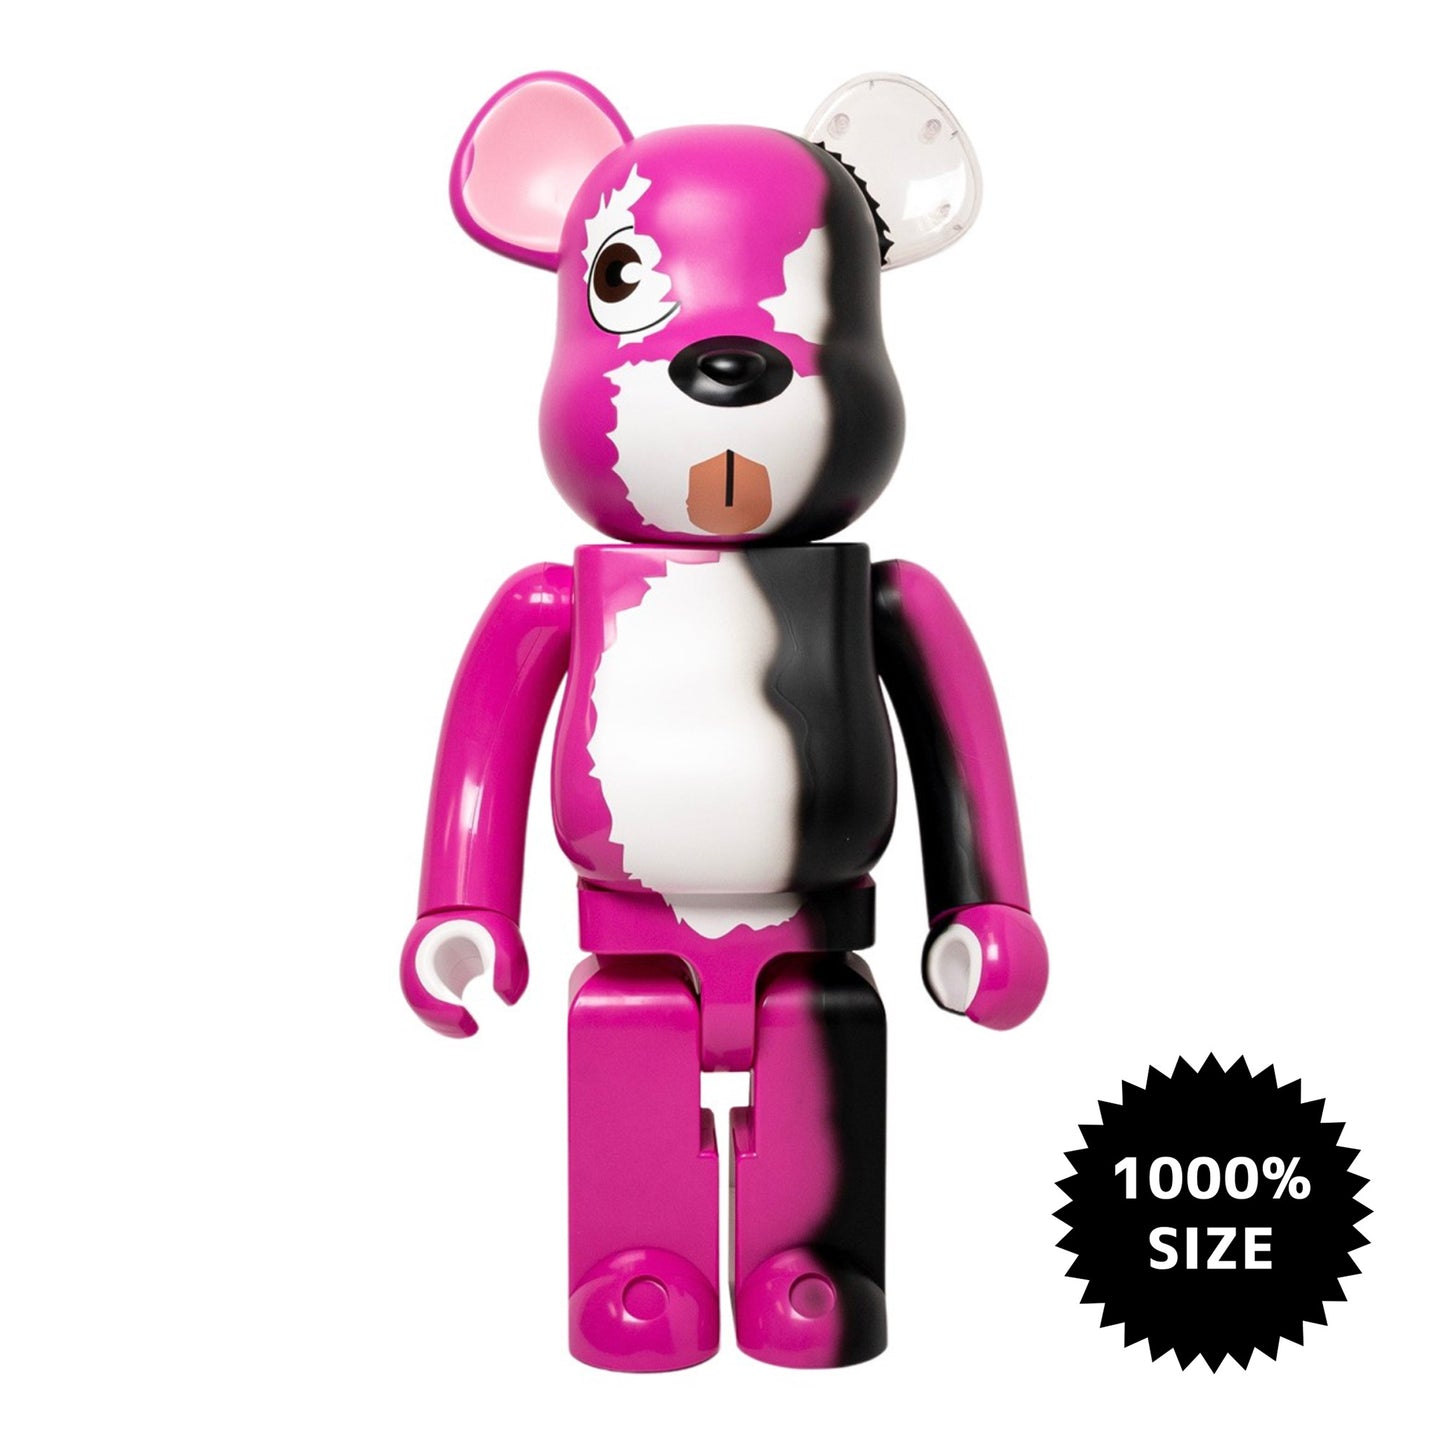 MEDICOM TOY: BE@RBRICK - Breaking Bad Pink Bear 1000%